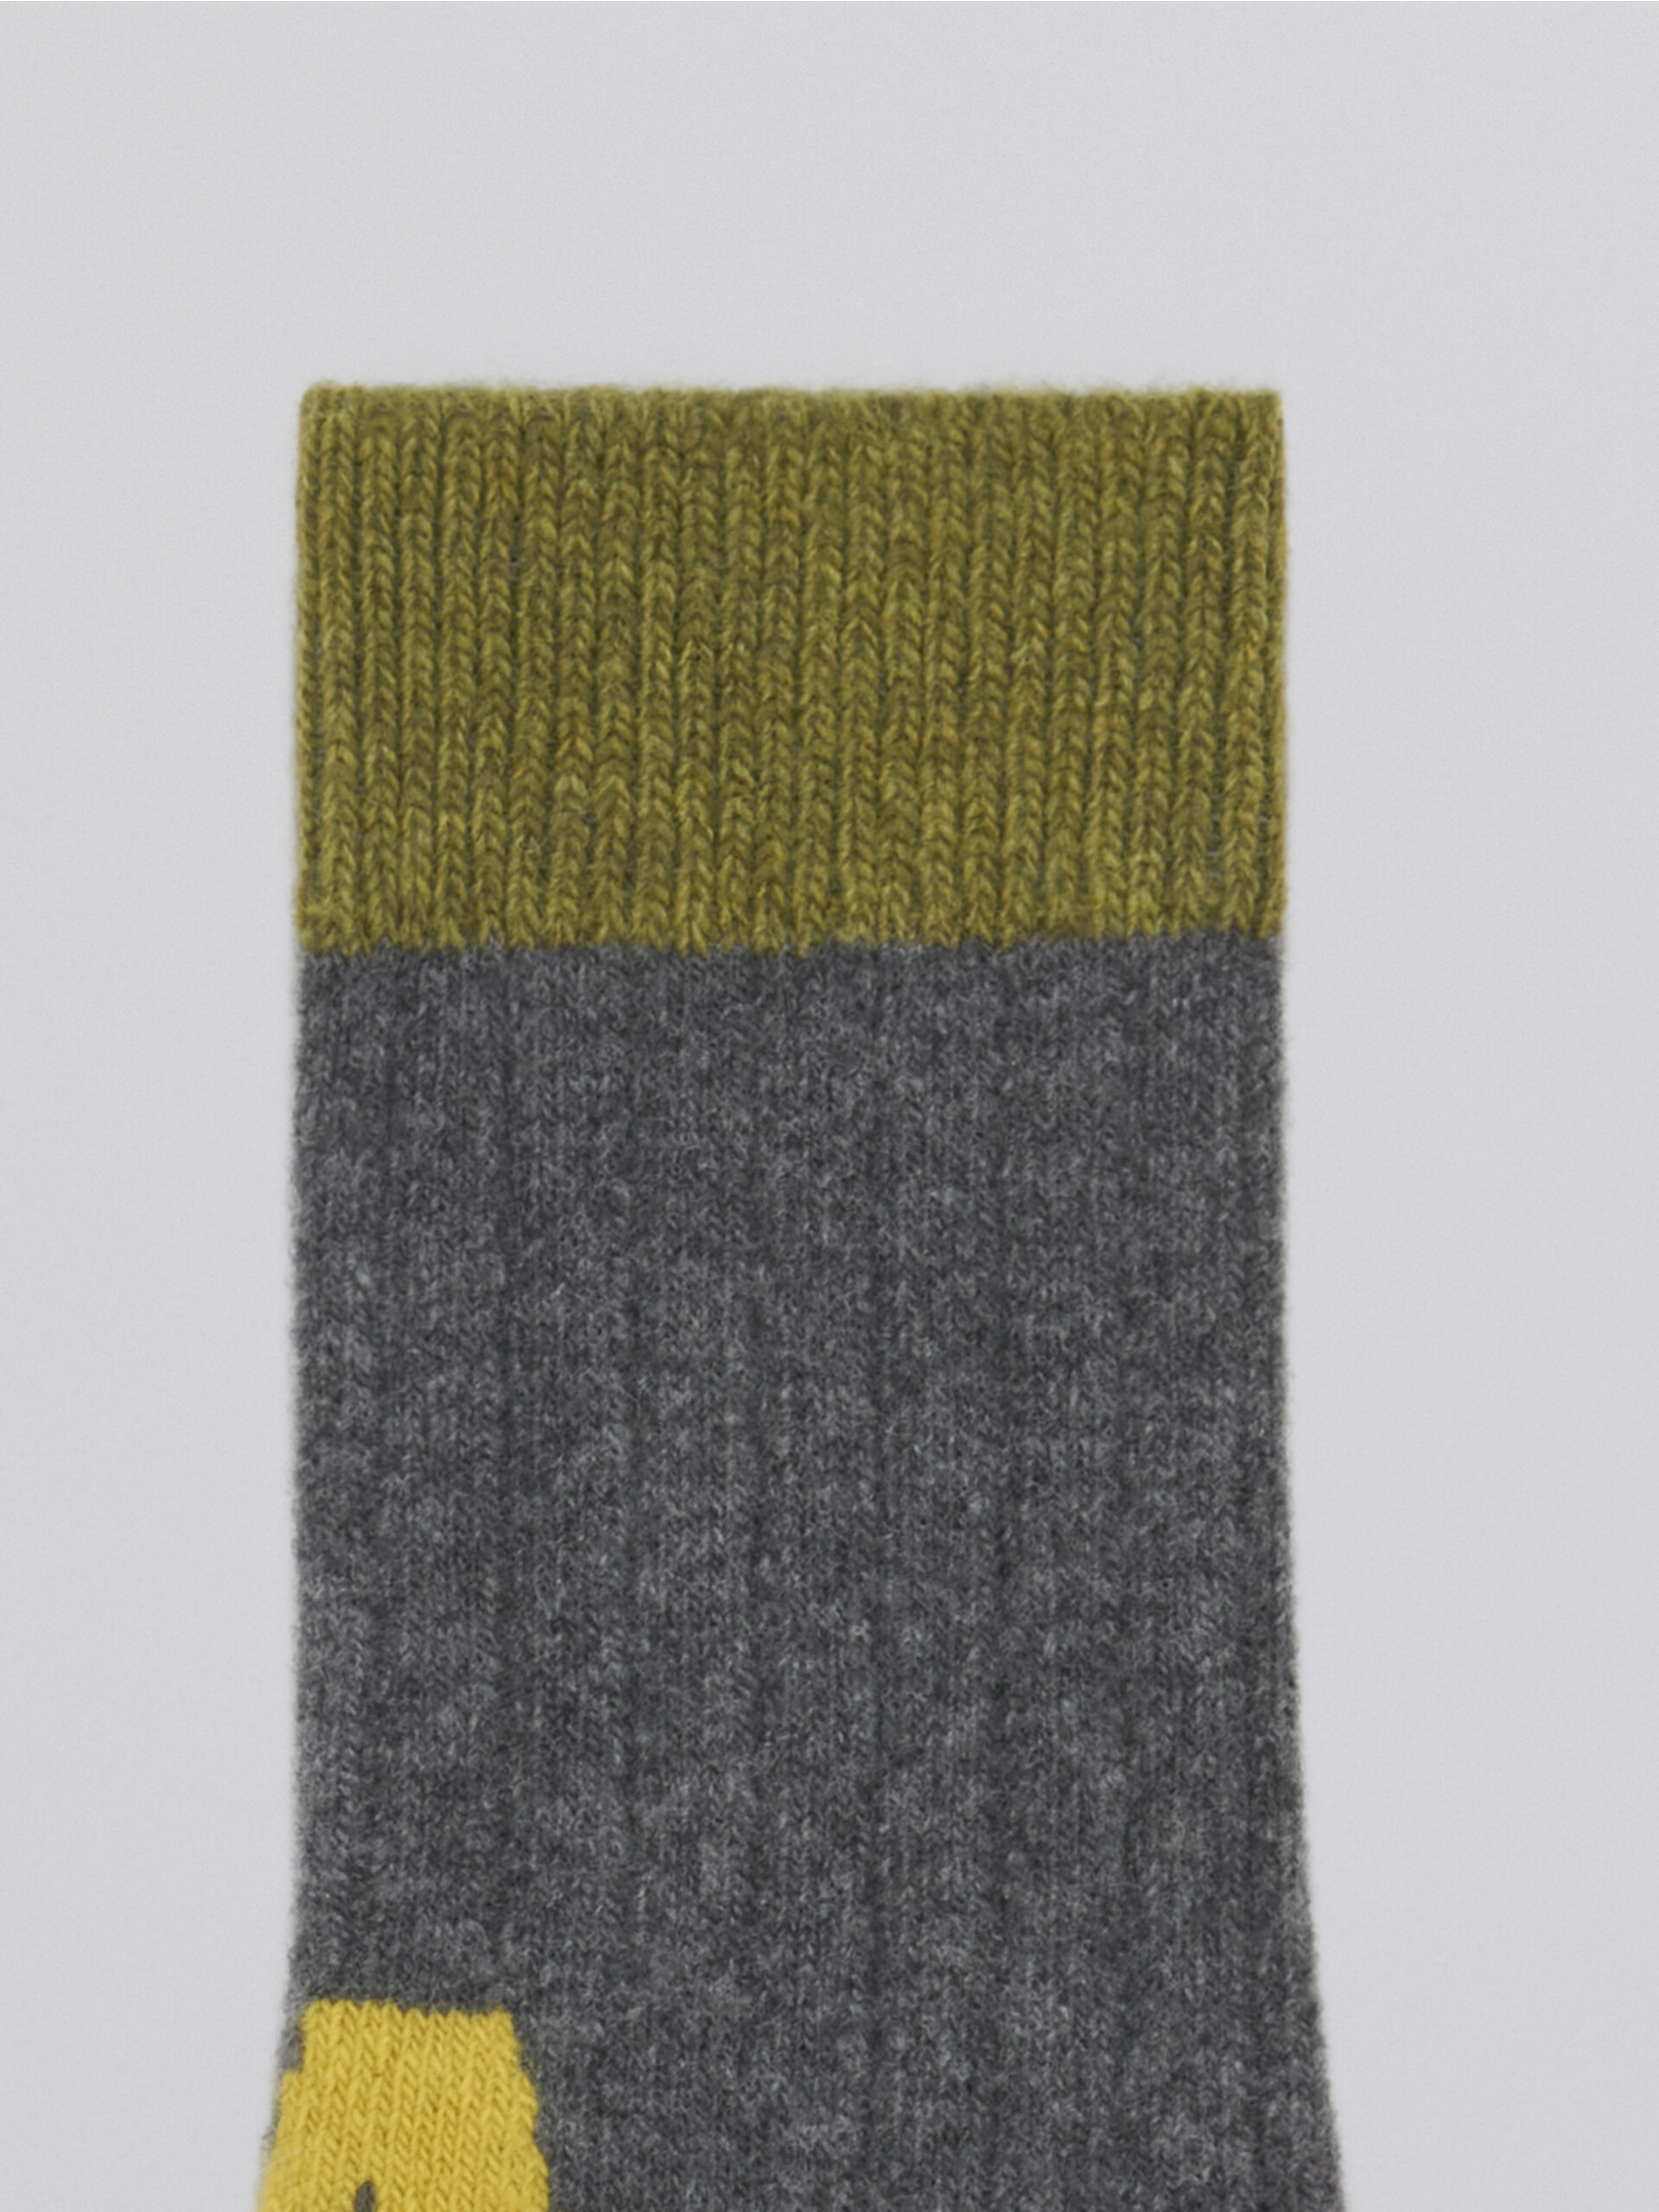 Calza in lana grigio con logo M jacquard - Calze - Image 3